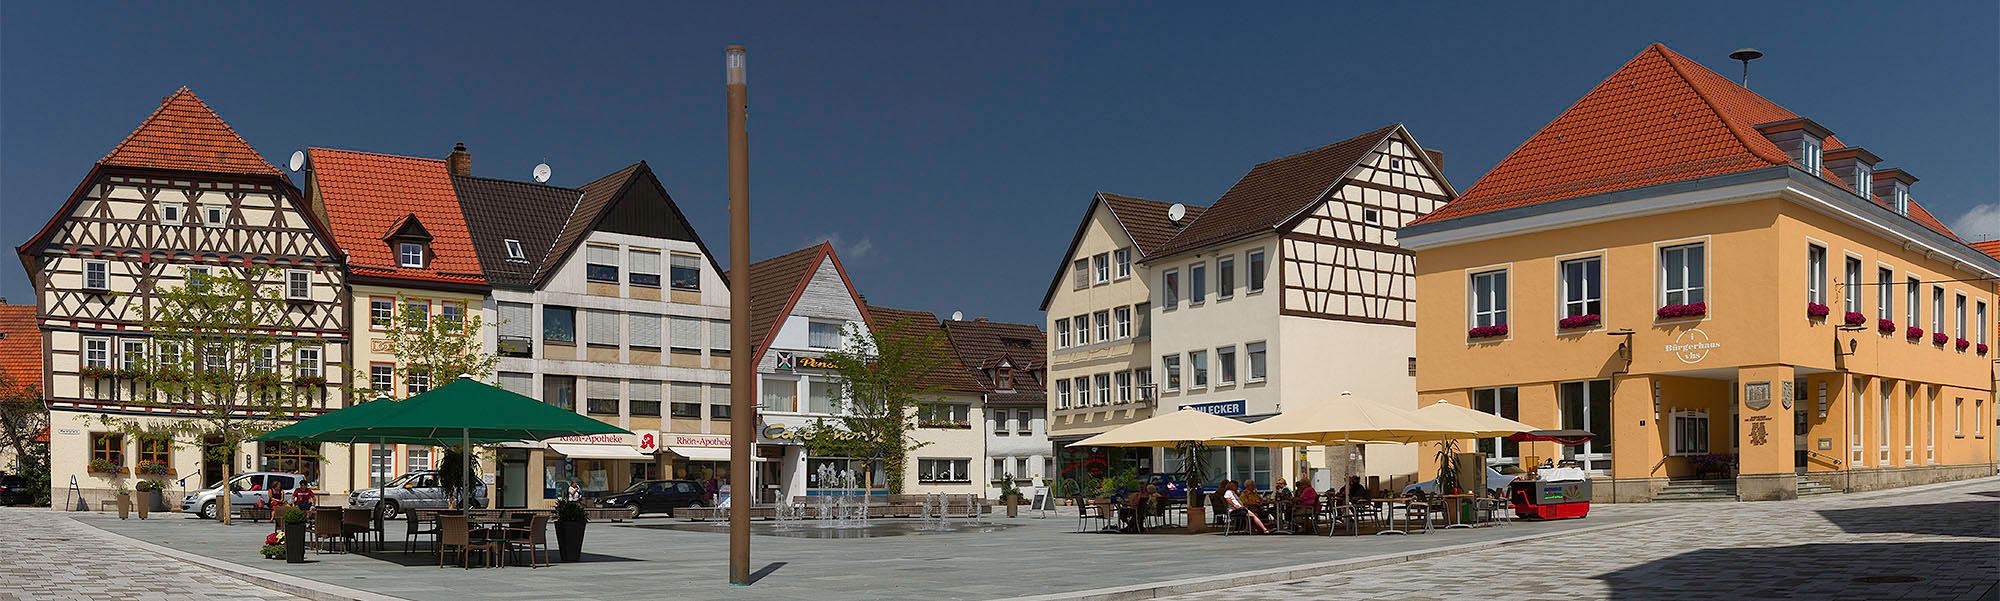 Marktplatz Mellrichstadt